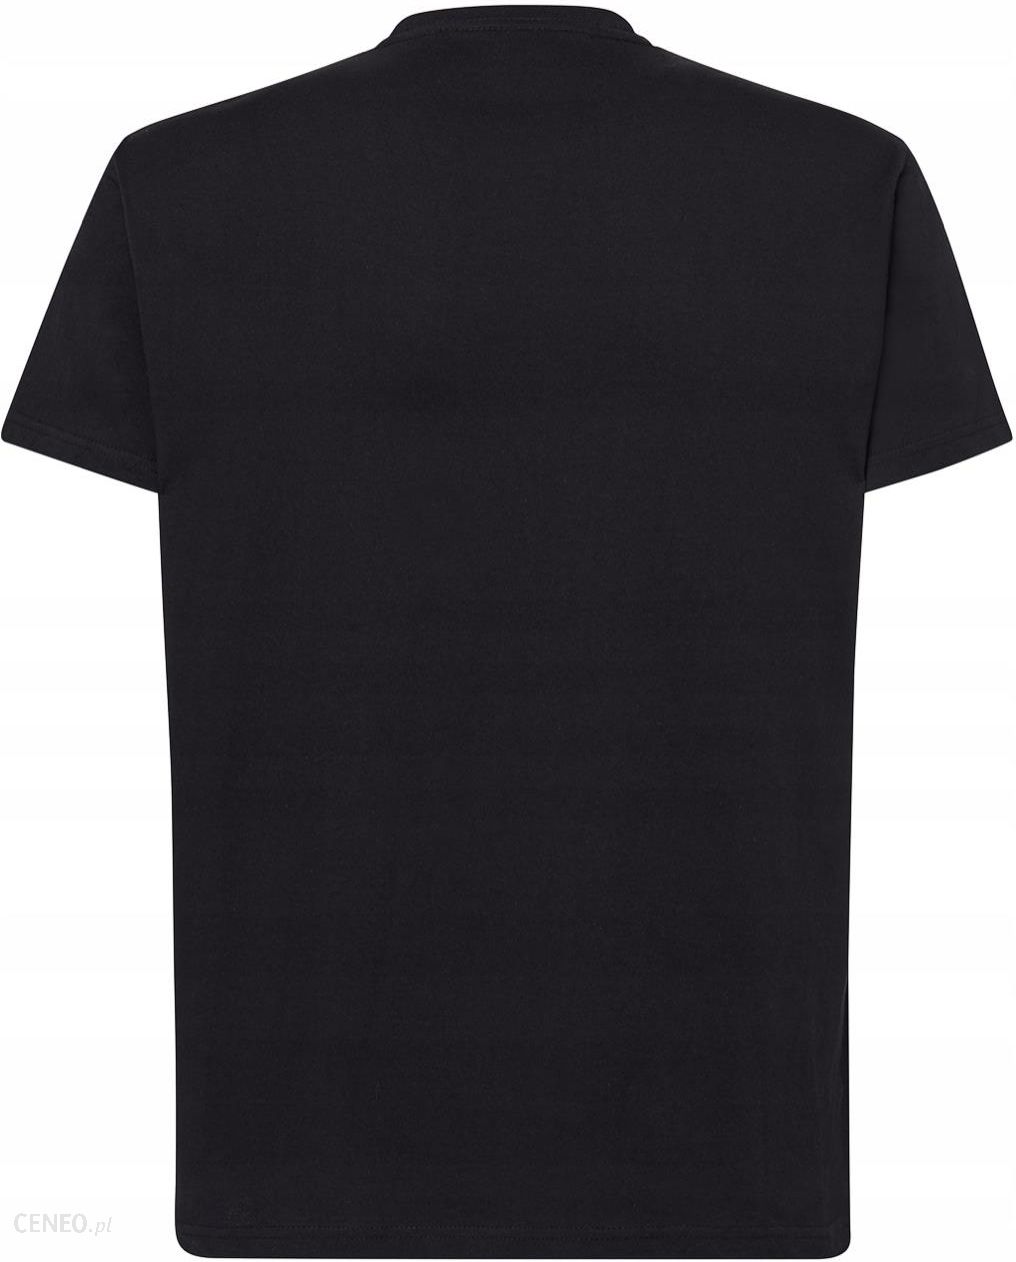 Podkoszulek (Tshirt) Czarny, męski - Roz 3XL